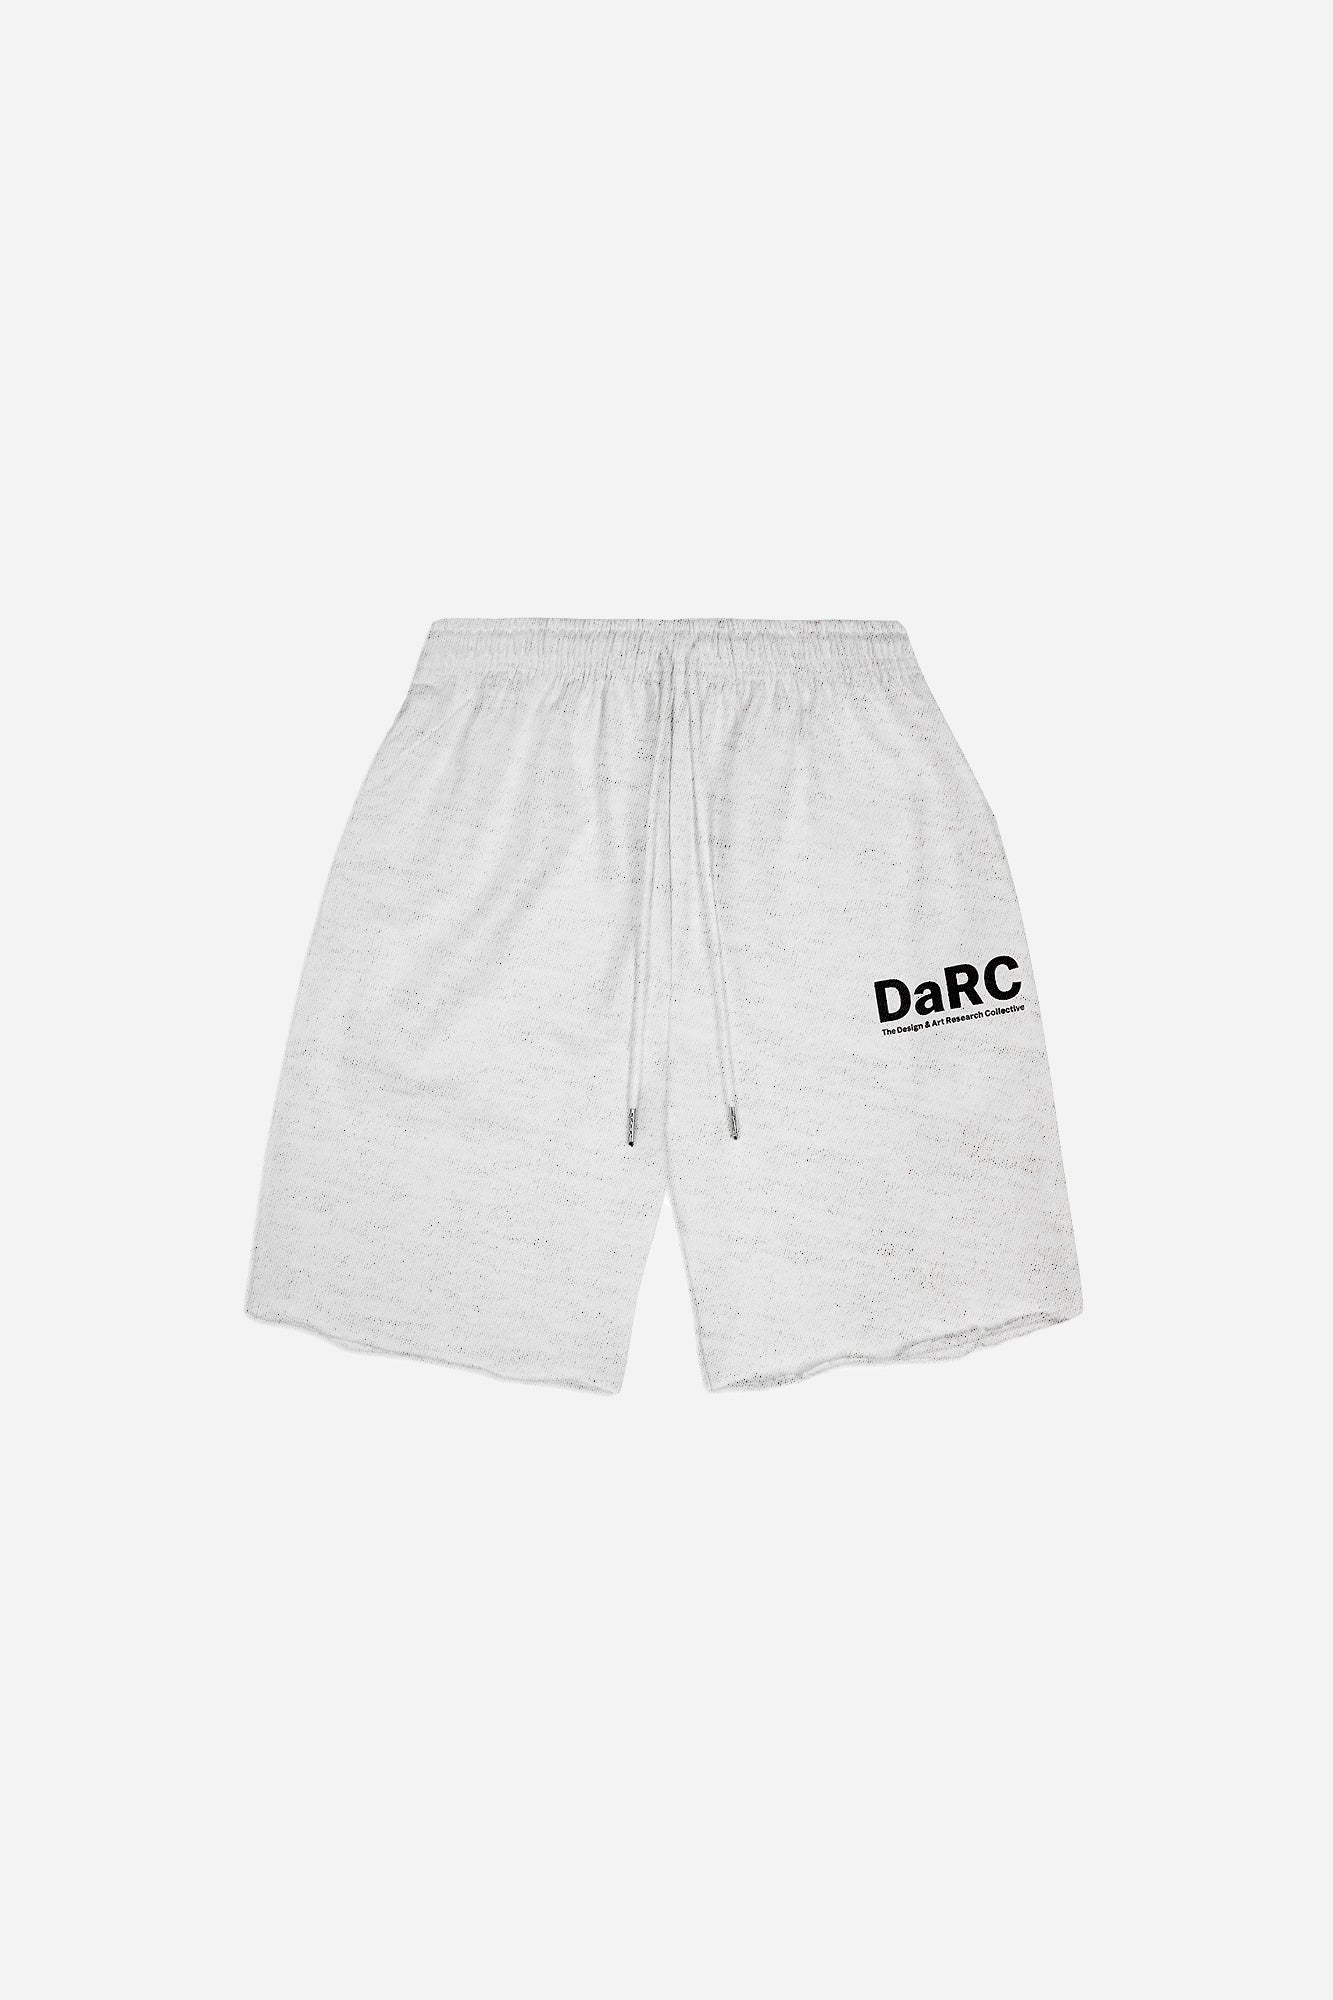 DaRC Shorts - Heater Grey